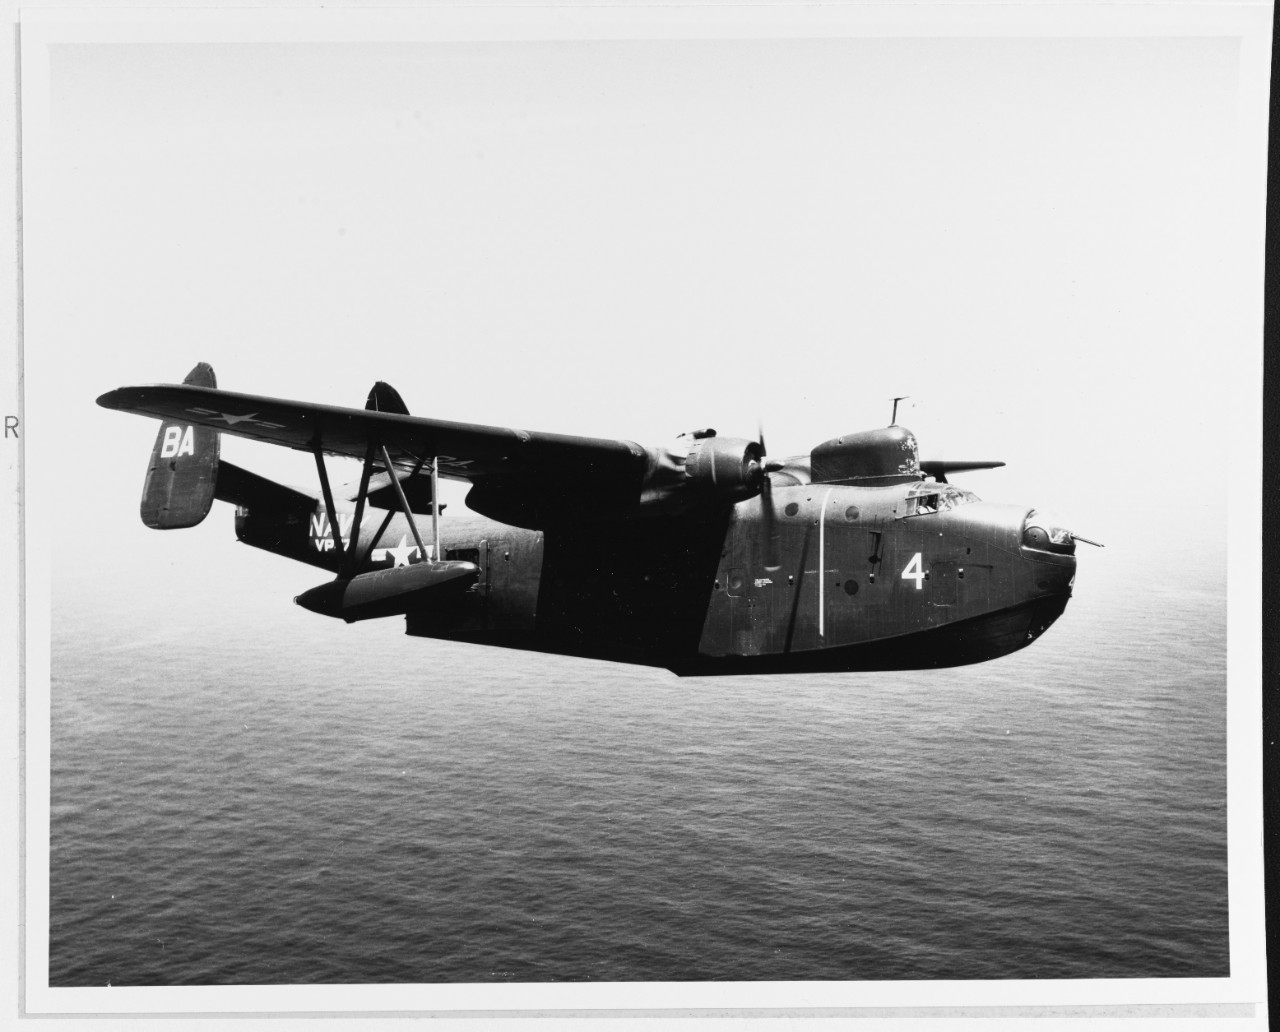 PBM-5 "Mariner" patrol plane